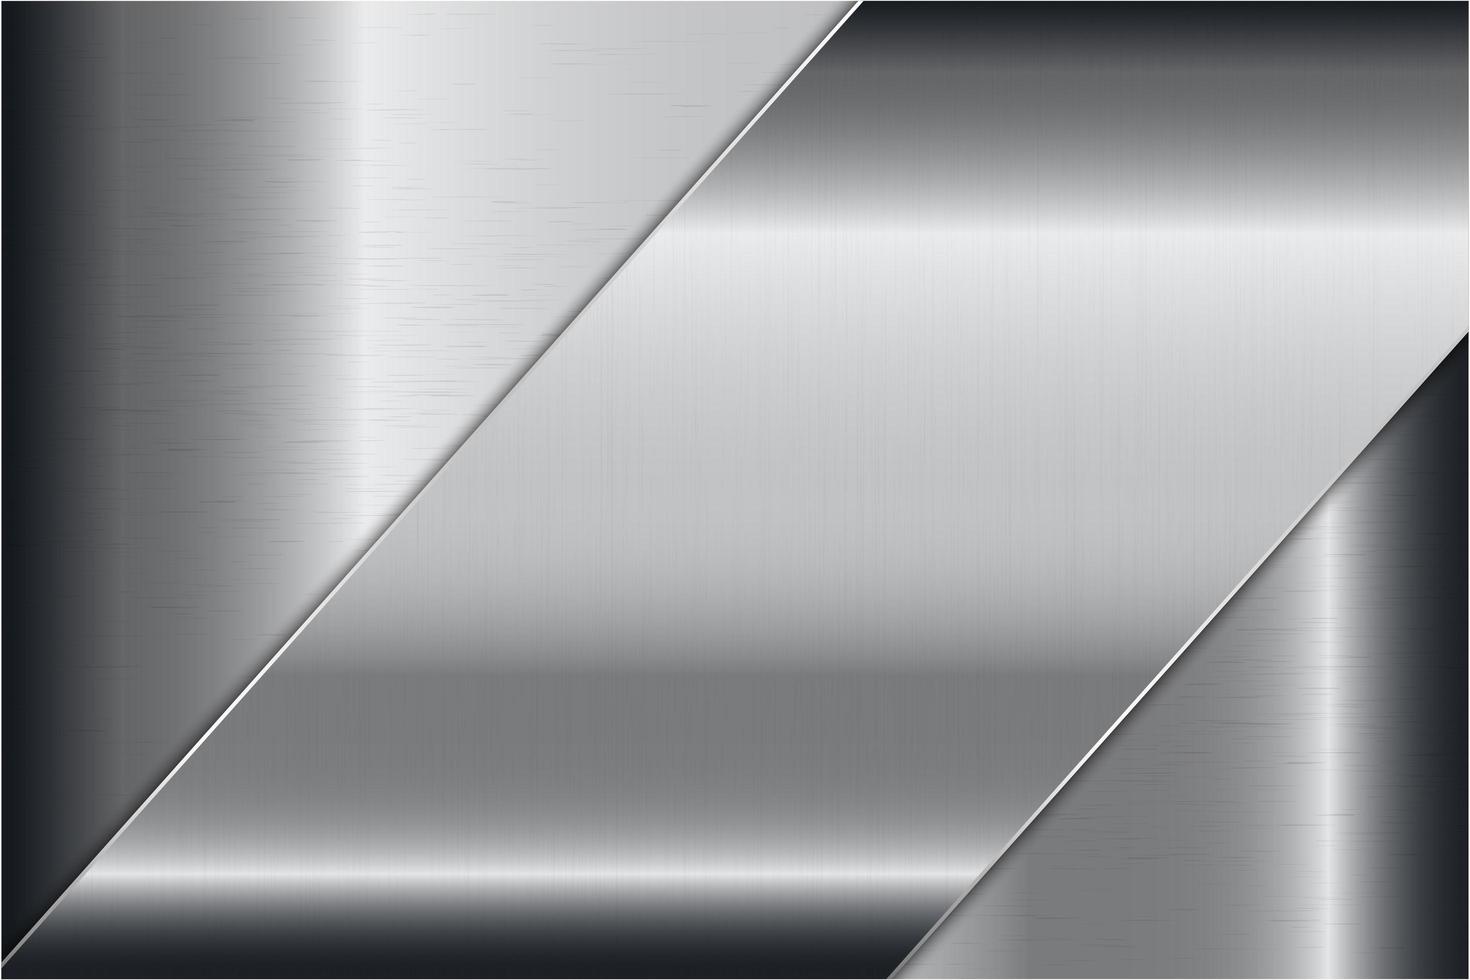 Modern silver metallic background vector